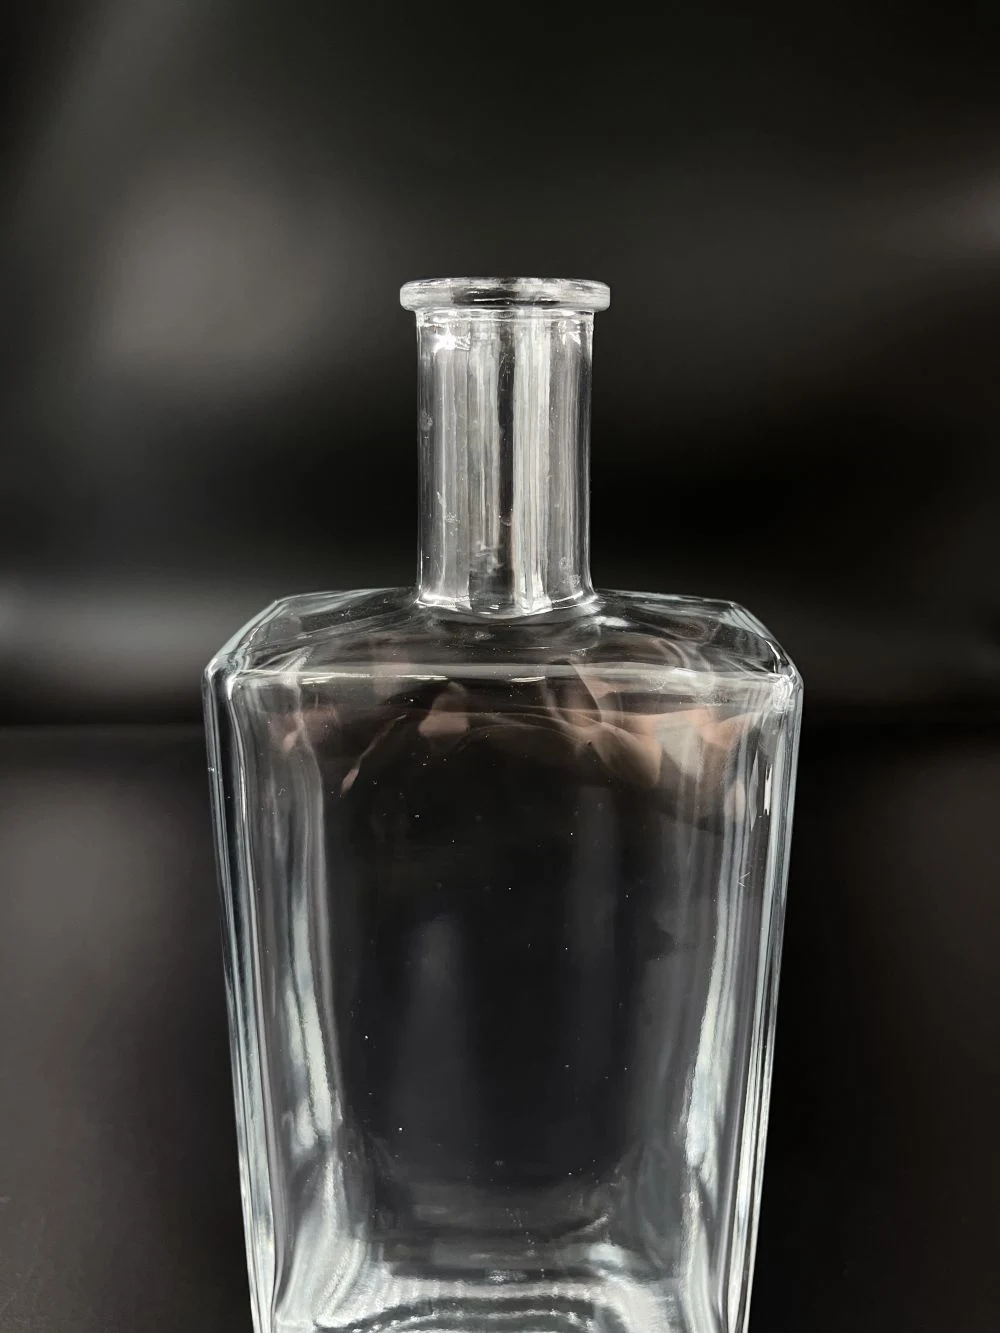 Hot Sale Square Crystal Glass Bottle for Liquor/Spirit/Vodka/Whisky/Wine with Cap